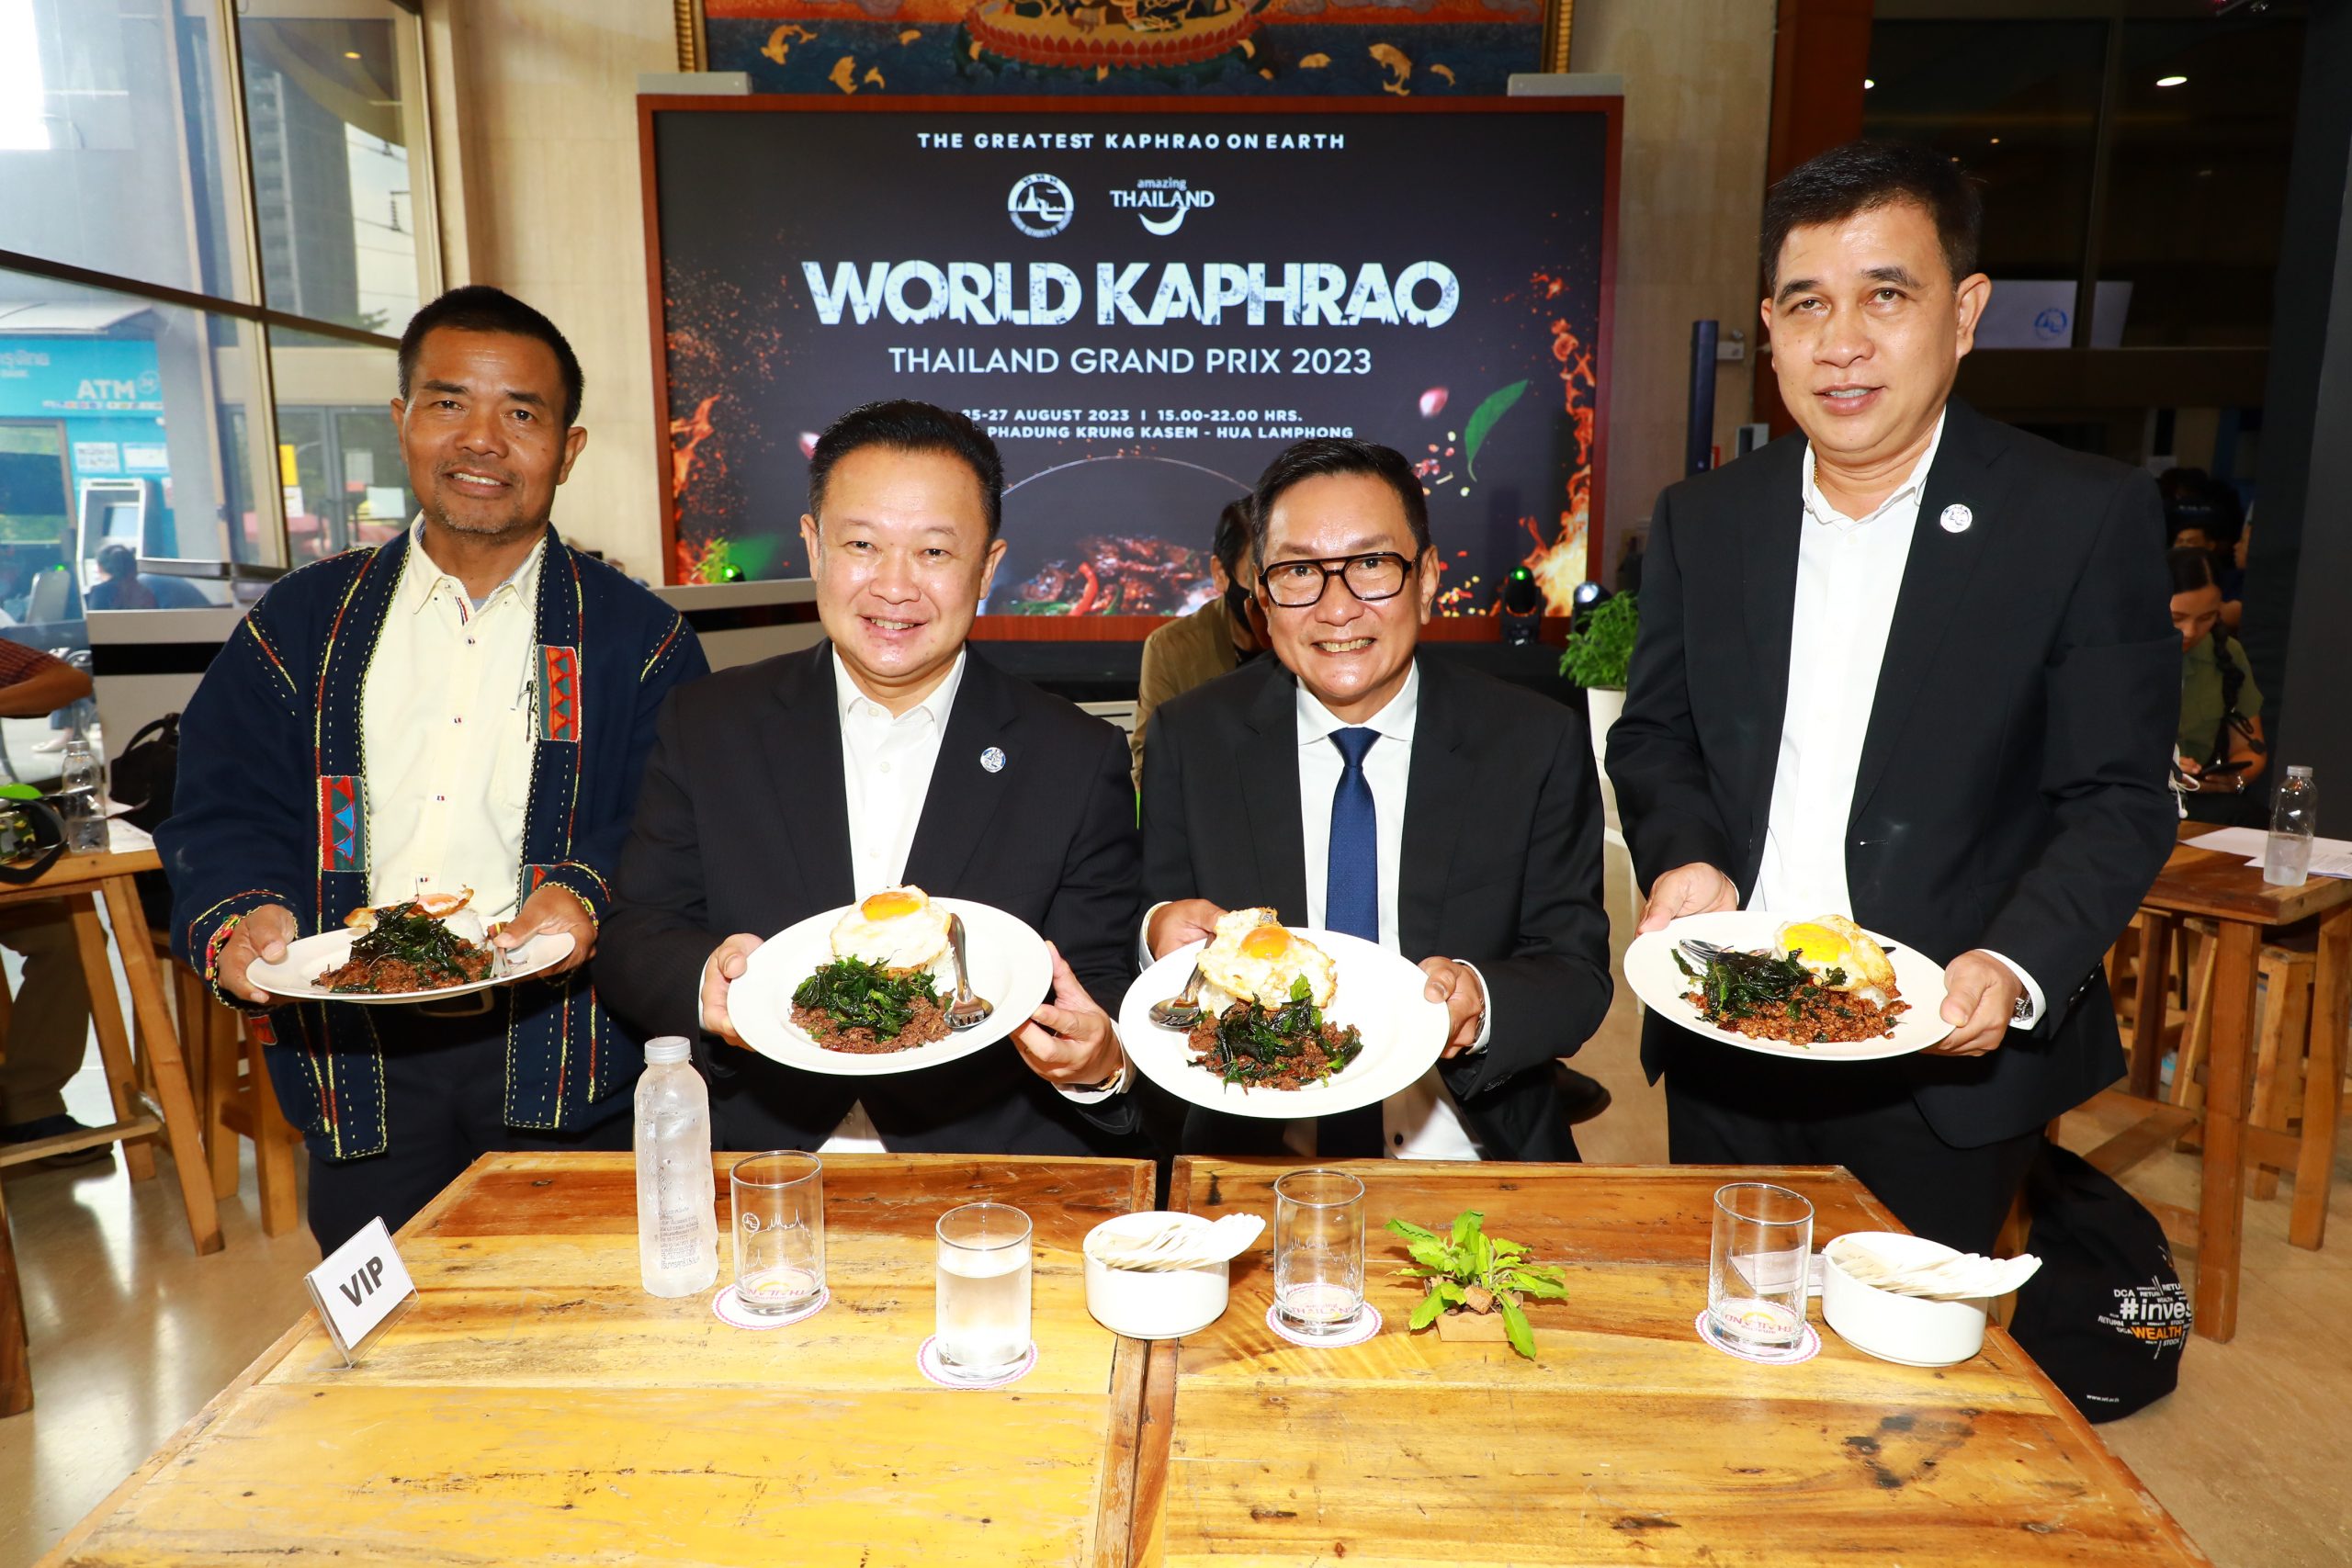 World Kaphrao Thailand Grand Prix 2023 ททท. ผัดกะเพรา เมนูระดับโลก